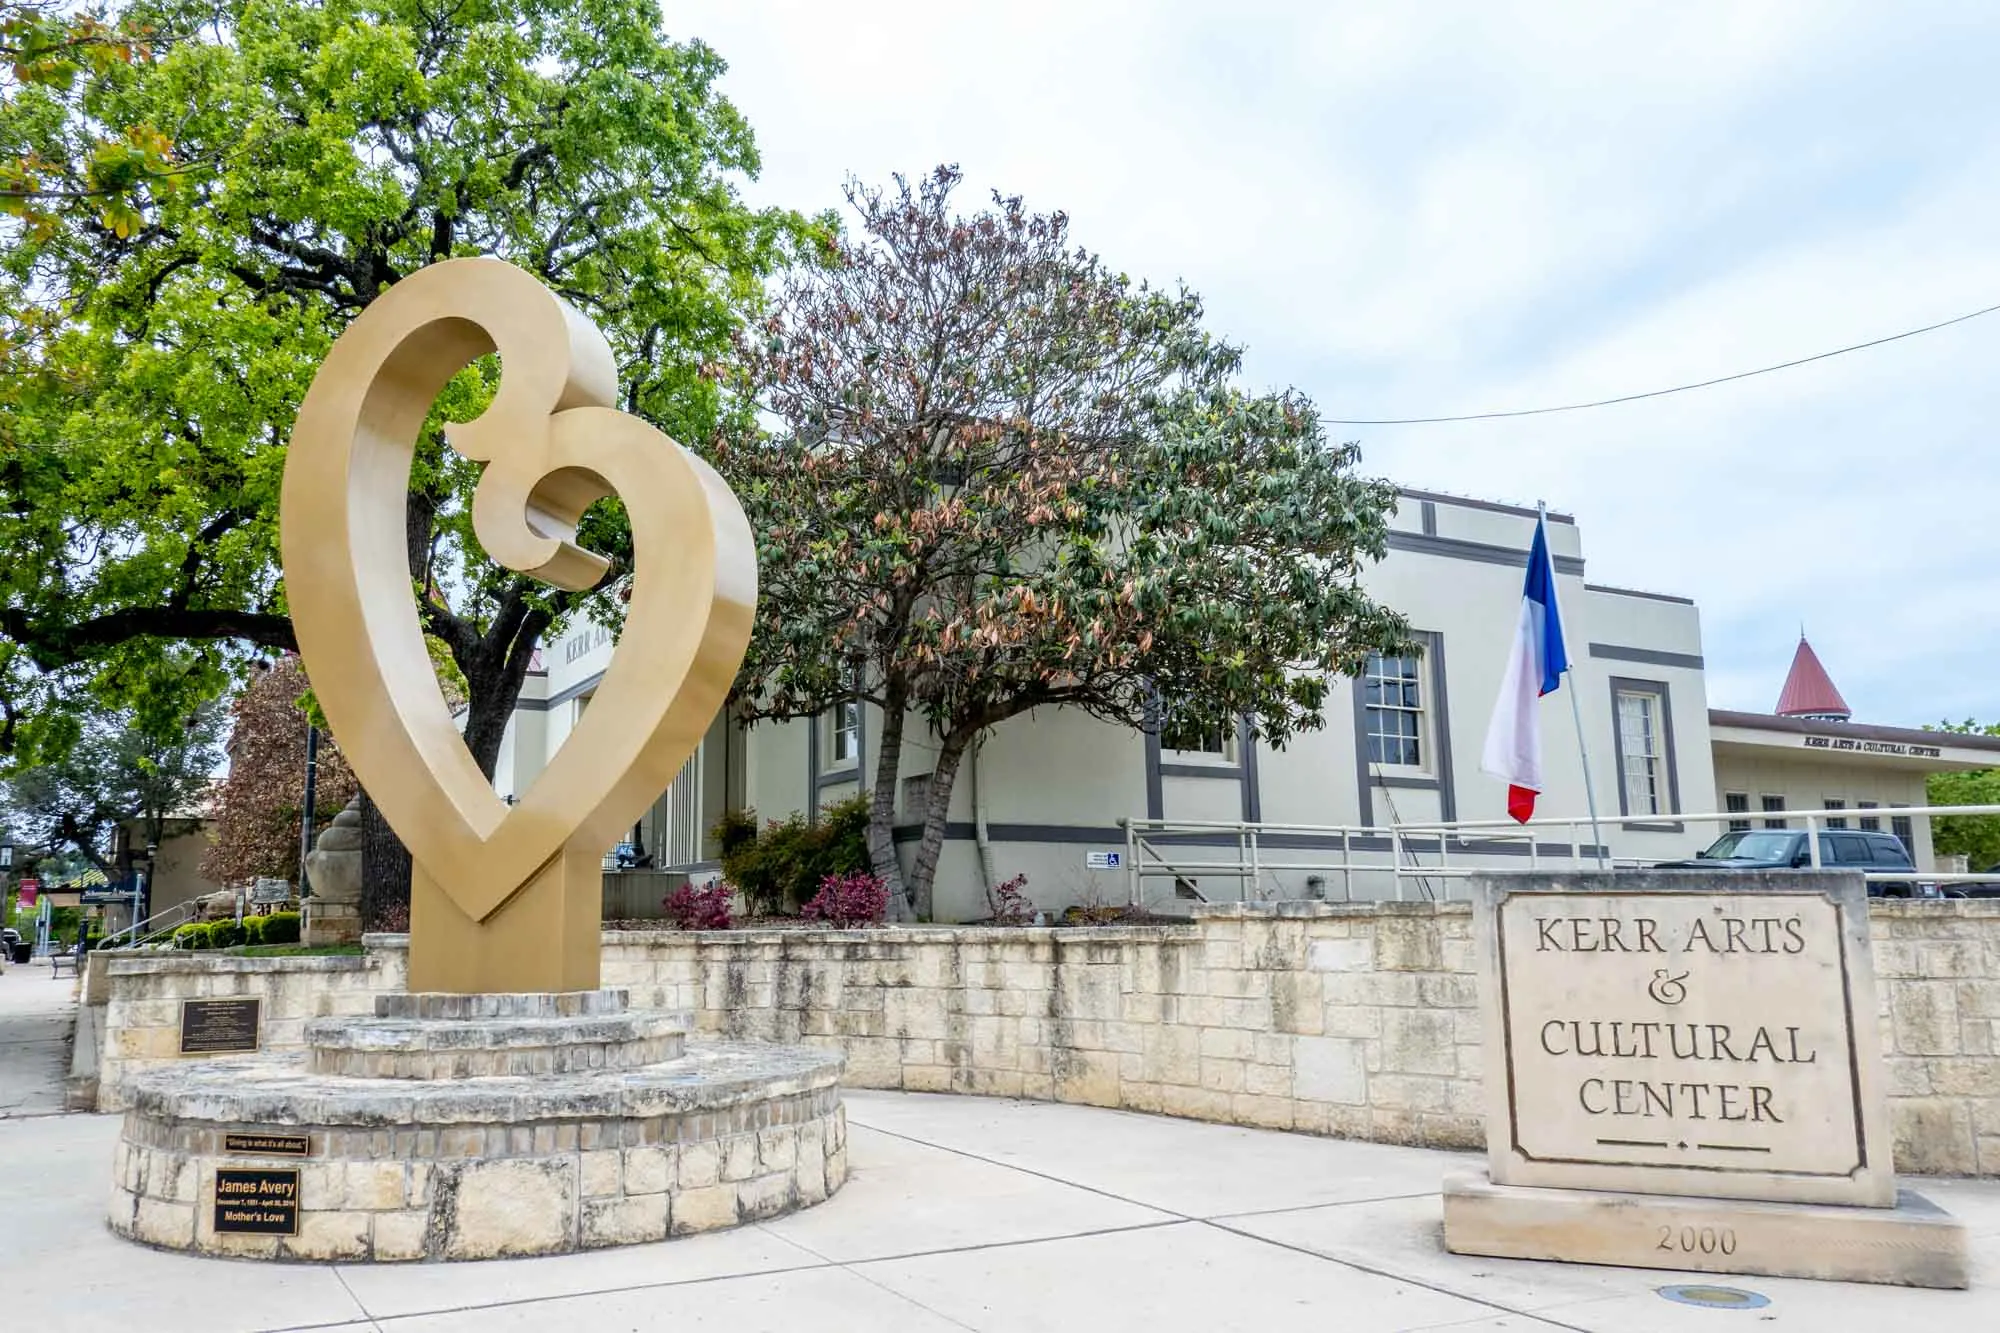 Heart sculpture beside a concrete sign for "Kerr Arts & Cultural Center"